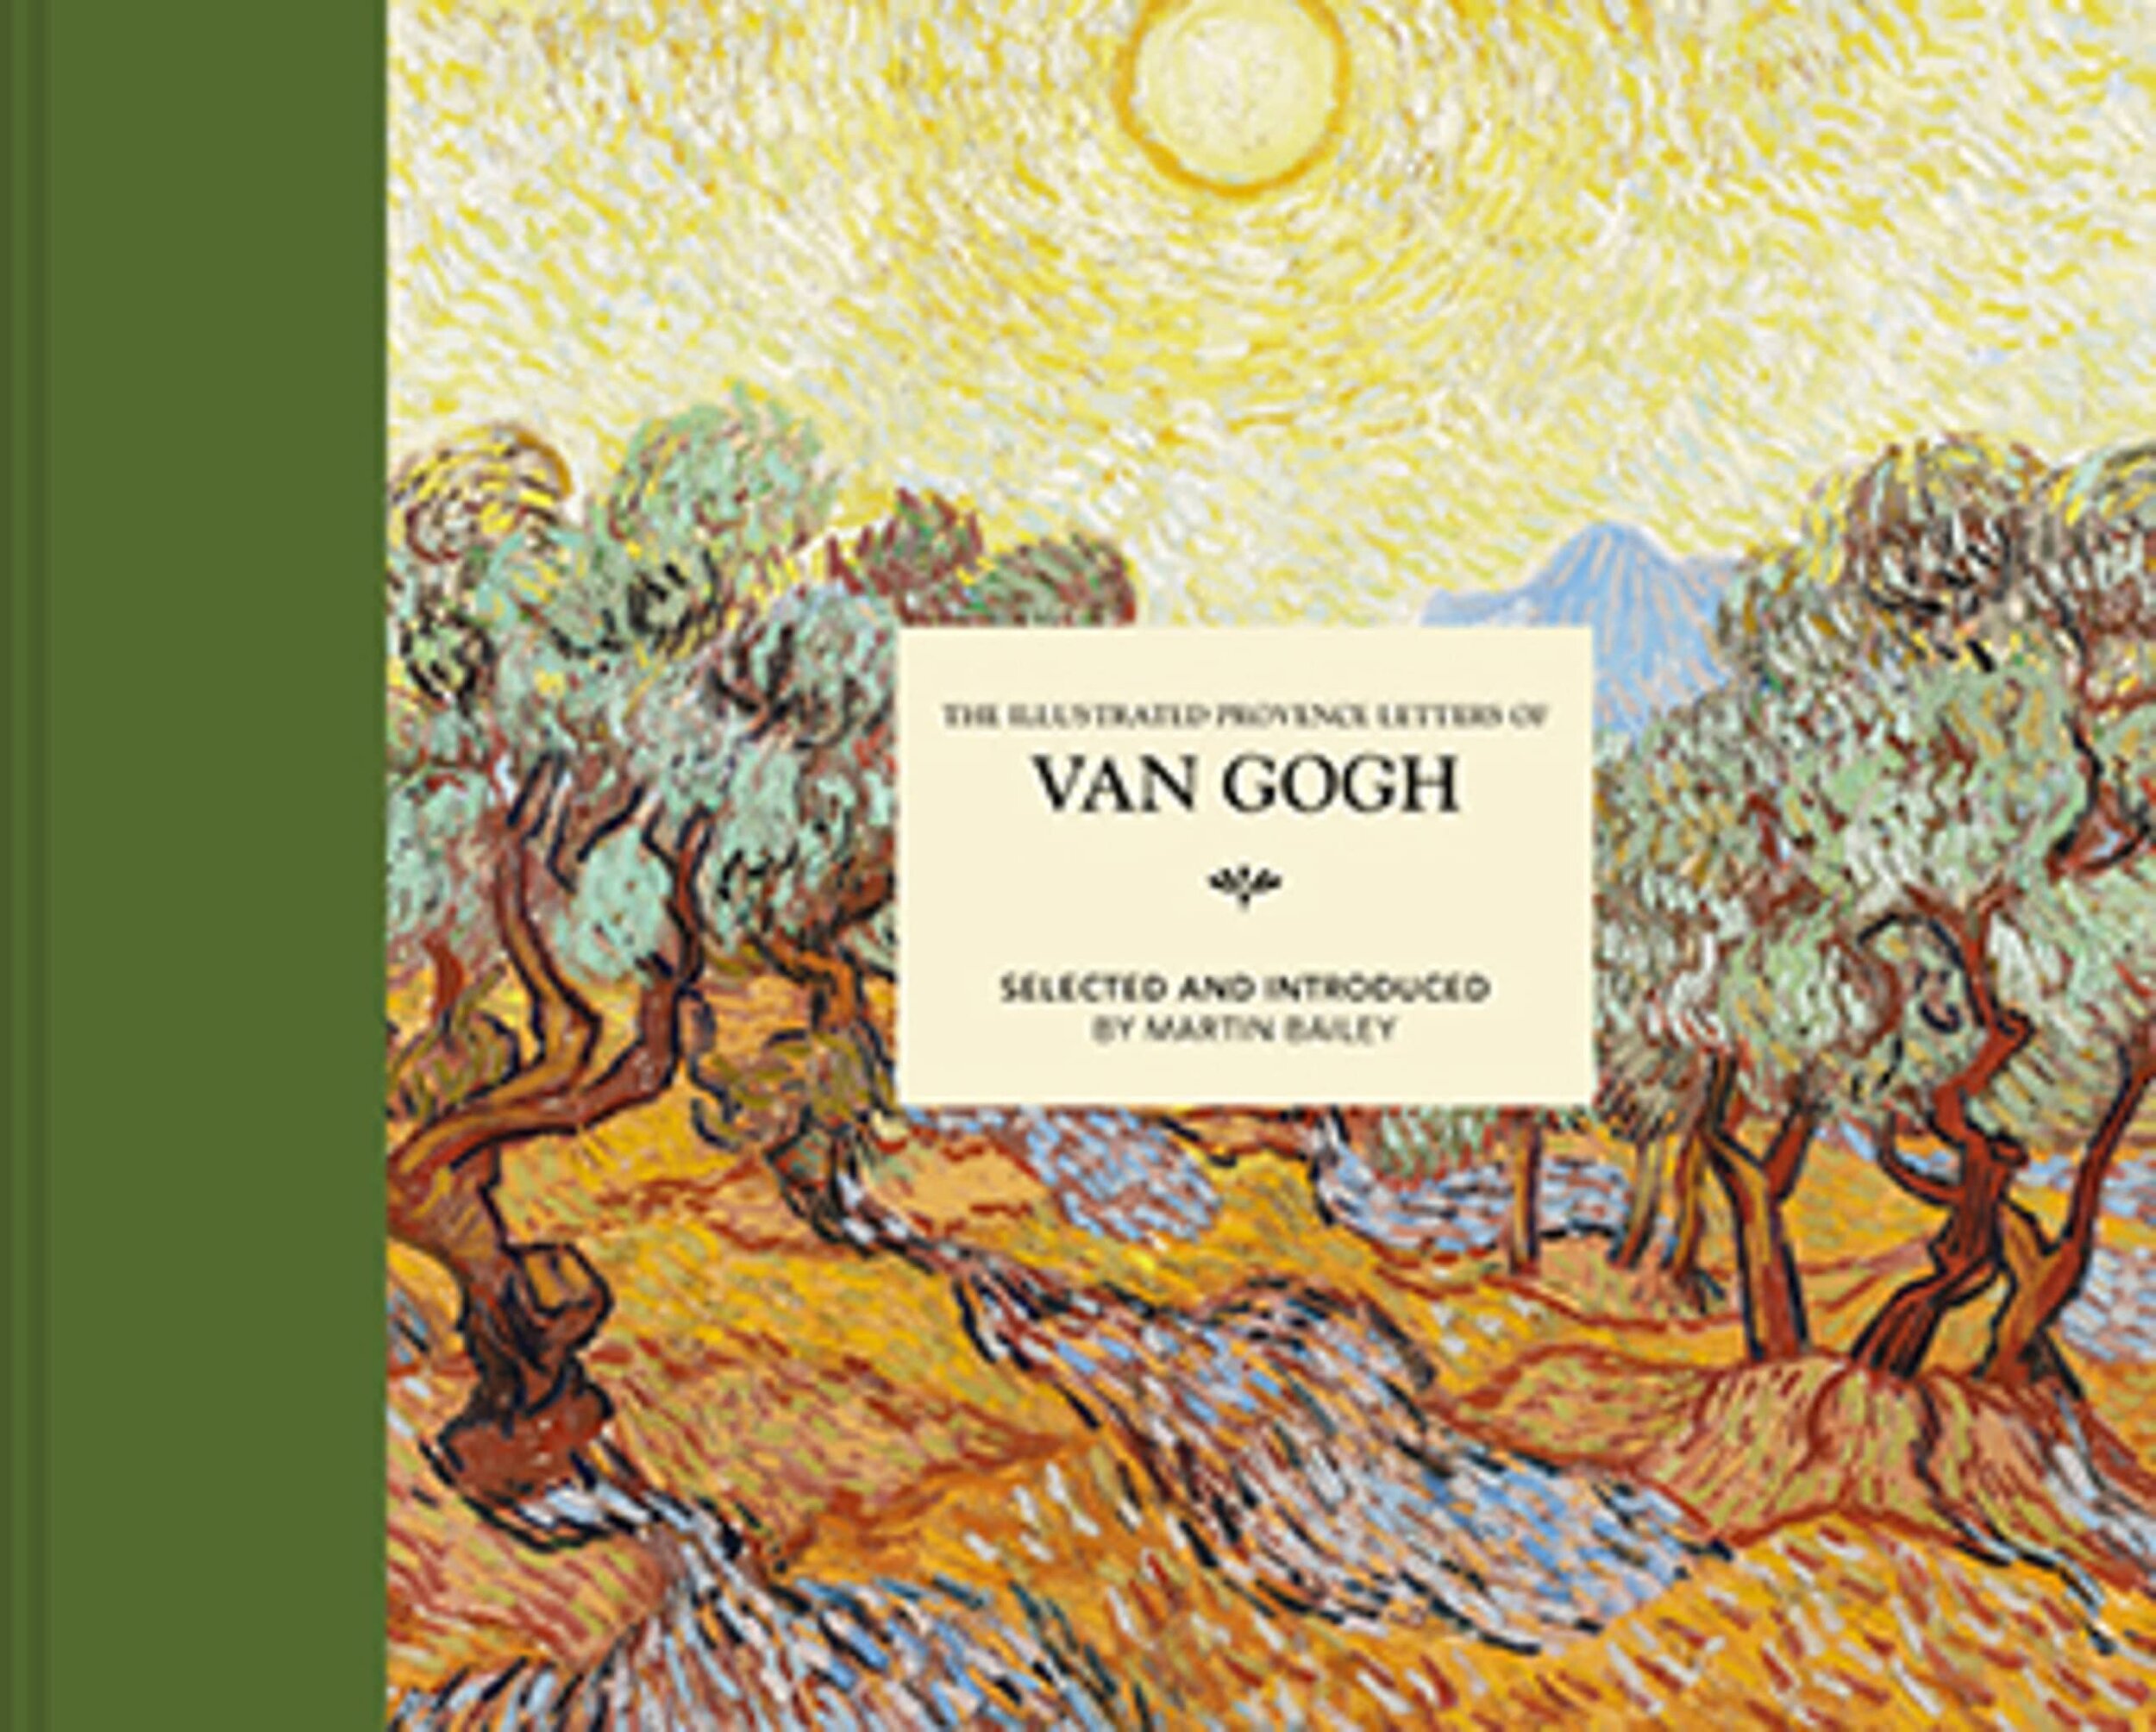 Van Gogh Book